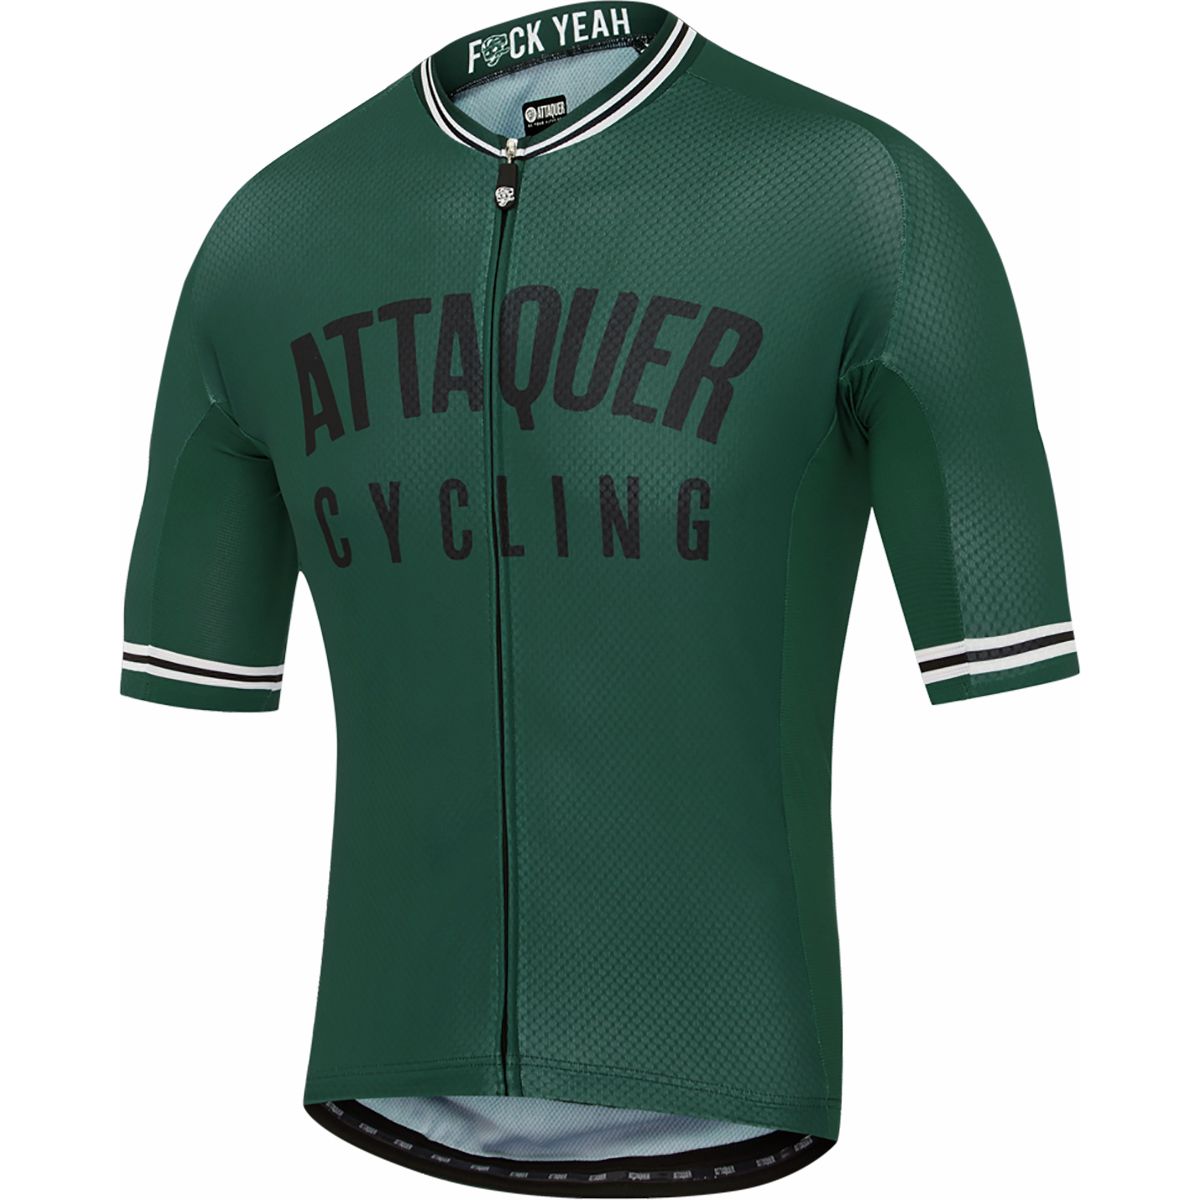 Attaquer All Day Club Jersey - Men's